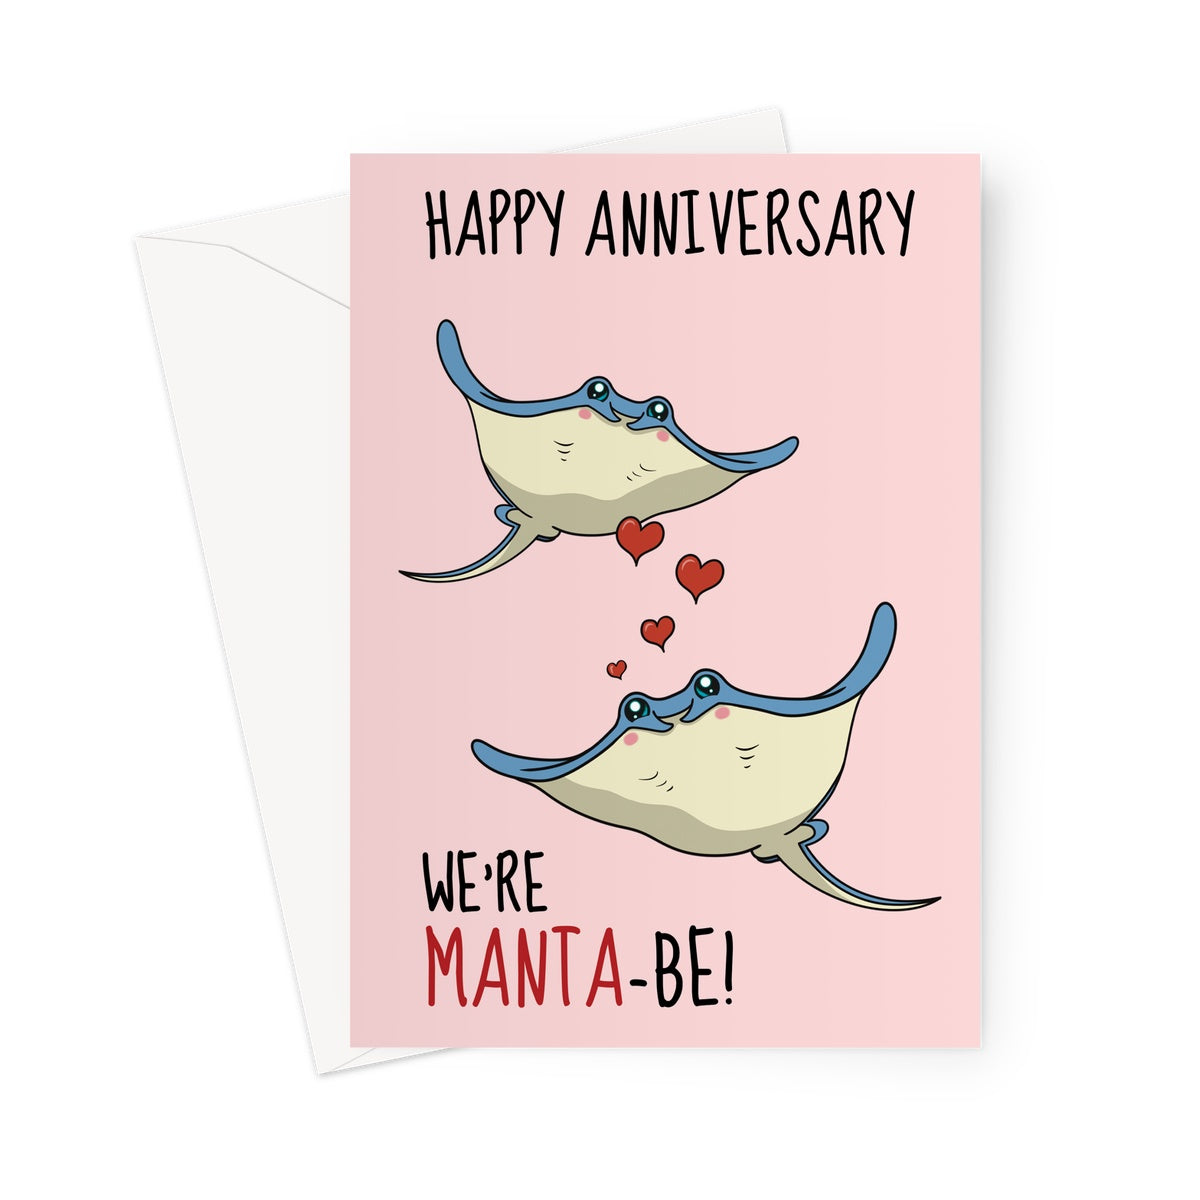 Cute Manta Ray Greeting Card For An Anniversary